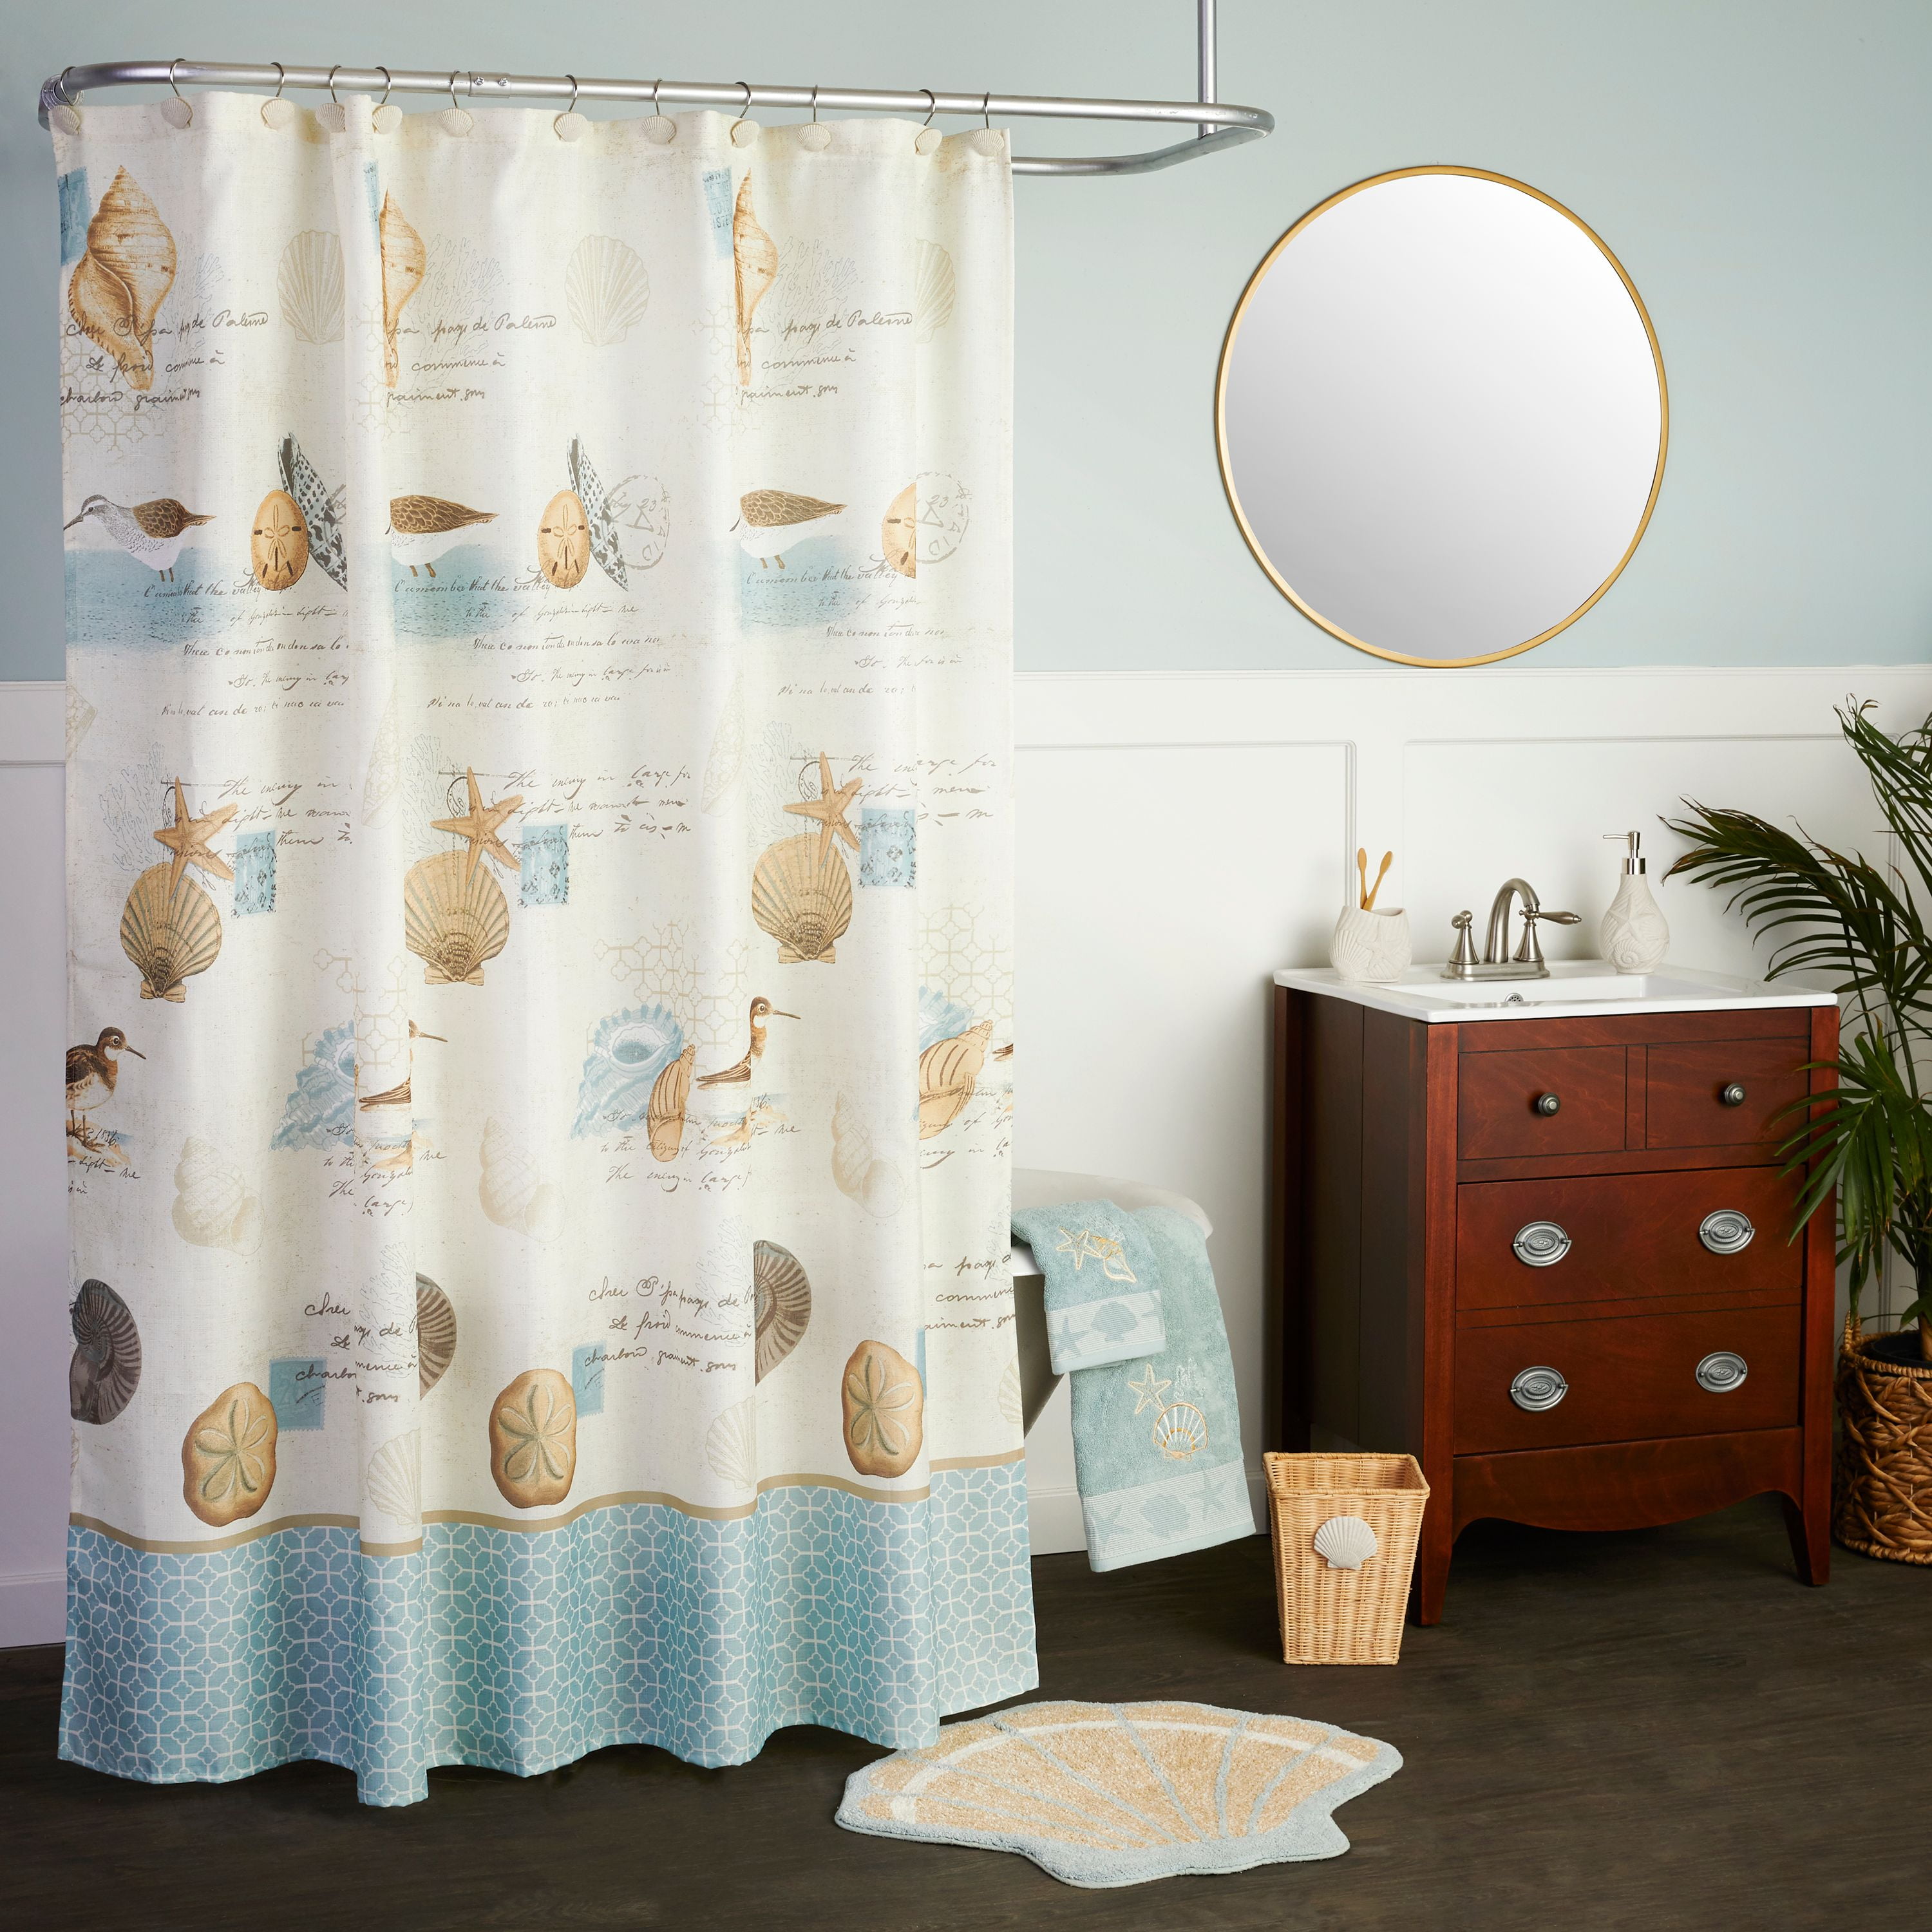 Better Homes & Gardens Coastal Fabric Shower Curtain, Neutral, 72 x 72 